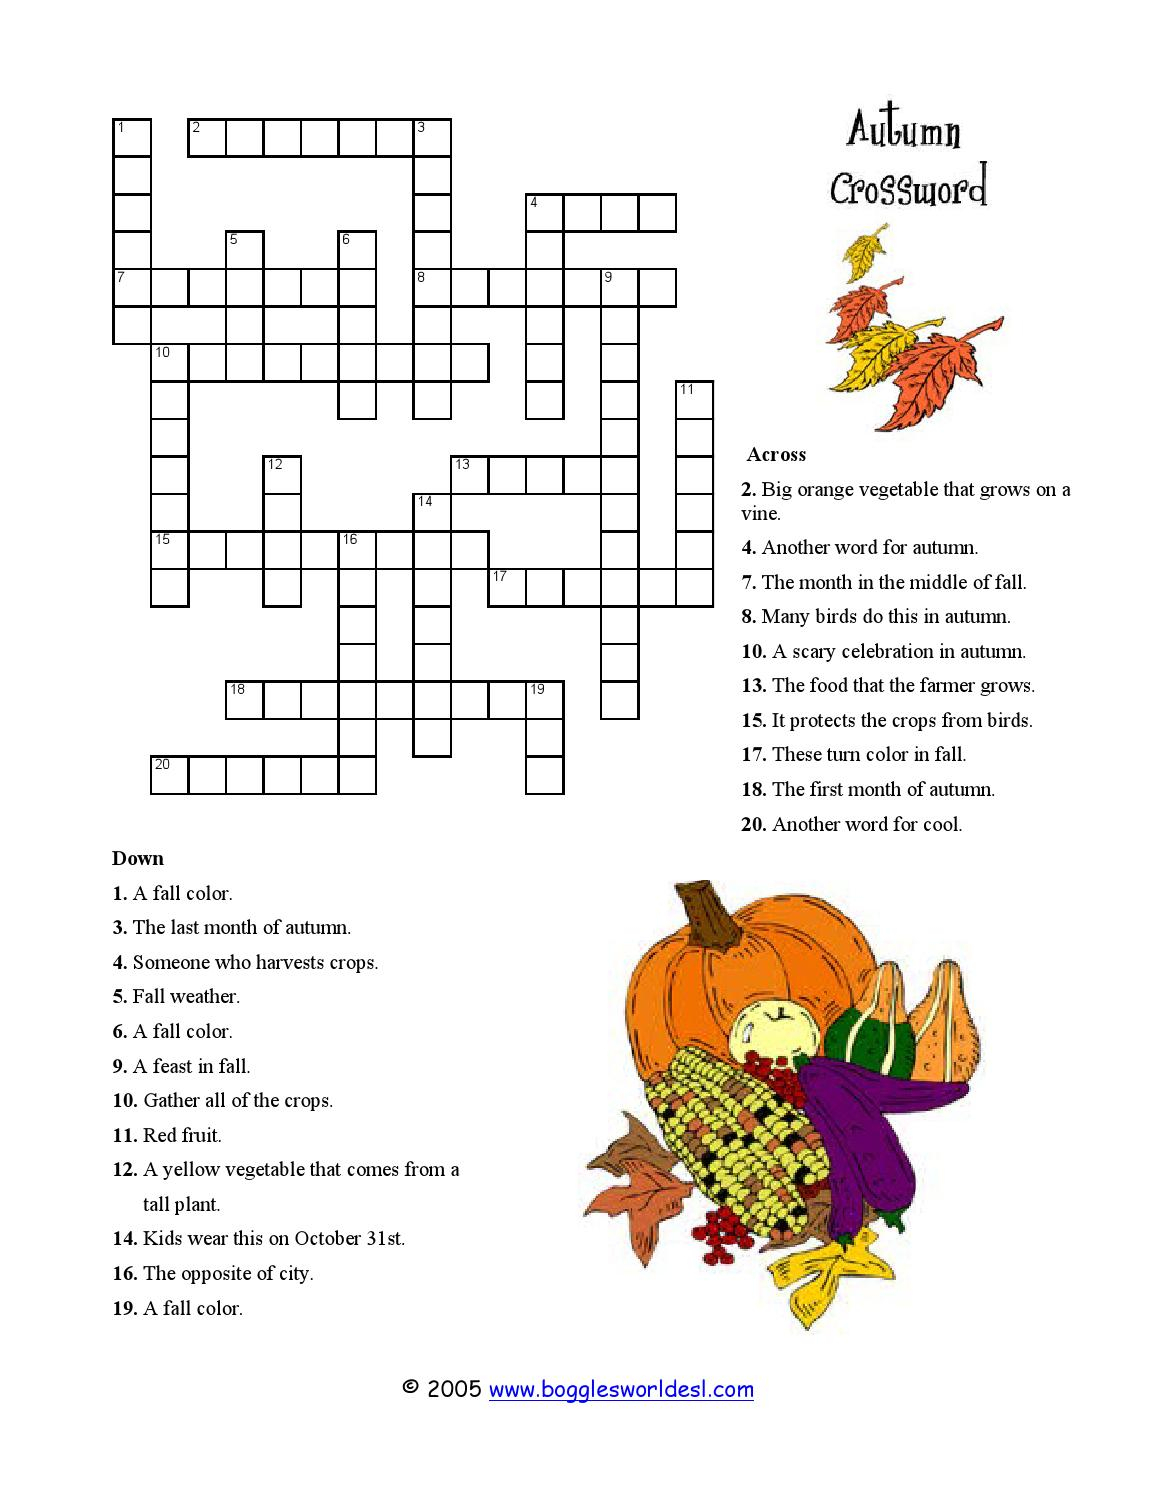 Bovenbouw Autumn Crossword By Leerteam engels Issuu